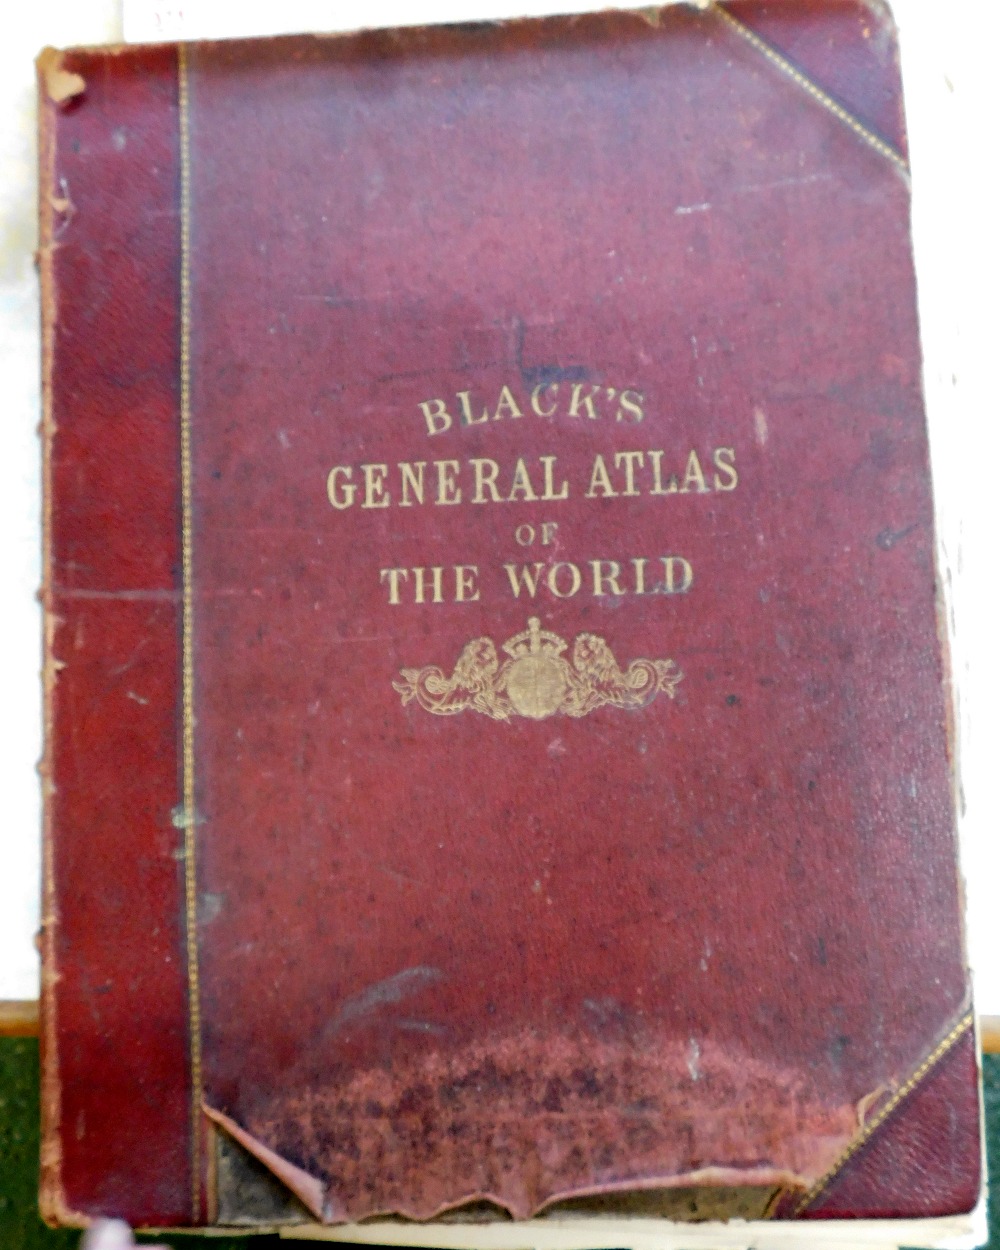 BLACK'S GENERAL ATLAS OF THE WORLD, Edinburgh, Adam & Charles Black, 1884, new and revised - Image 2 of 6